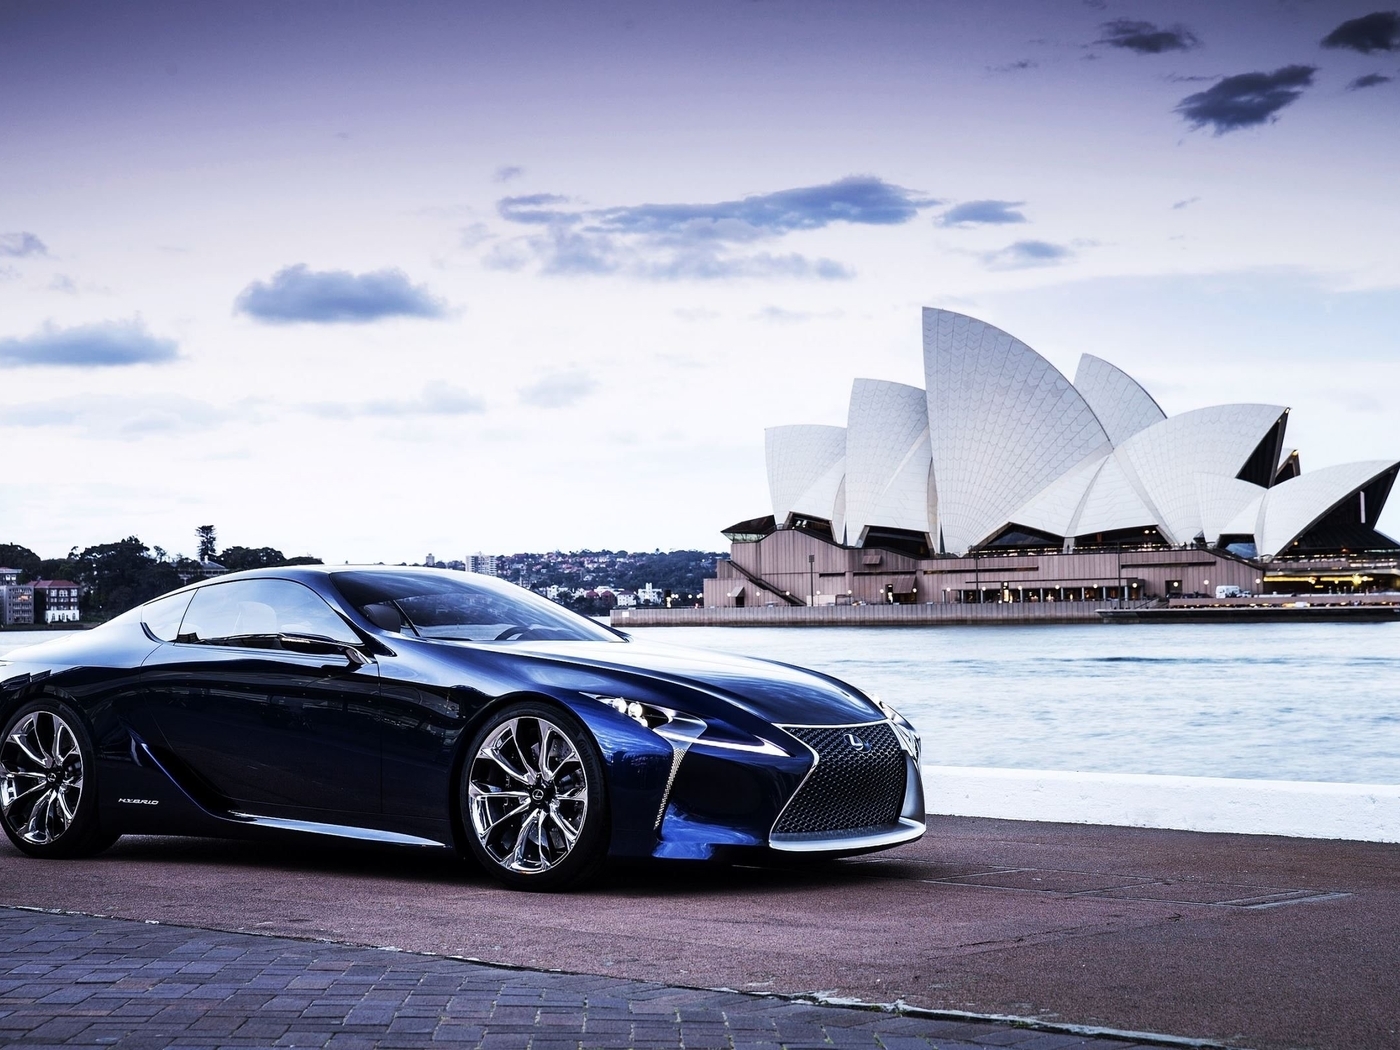 Картинка: Lexus, LF-LC blue, концепт, гибрид, голубой опал, Sydney, Opera House, набережная